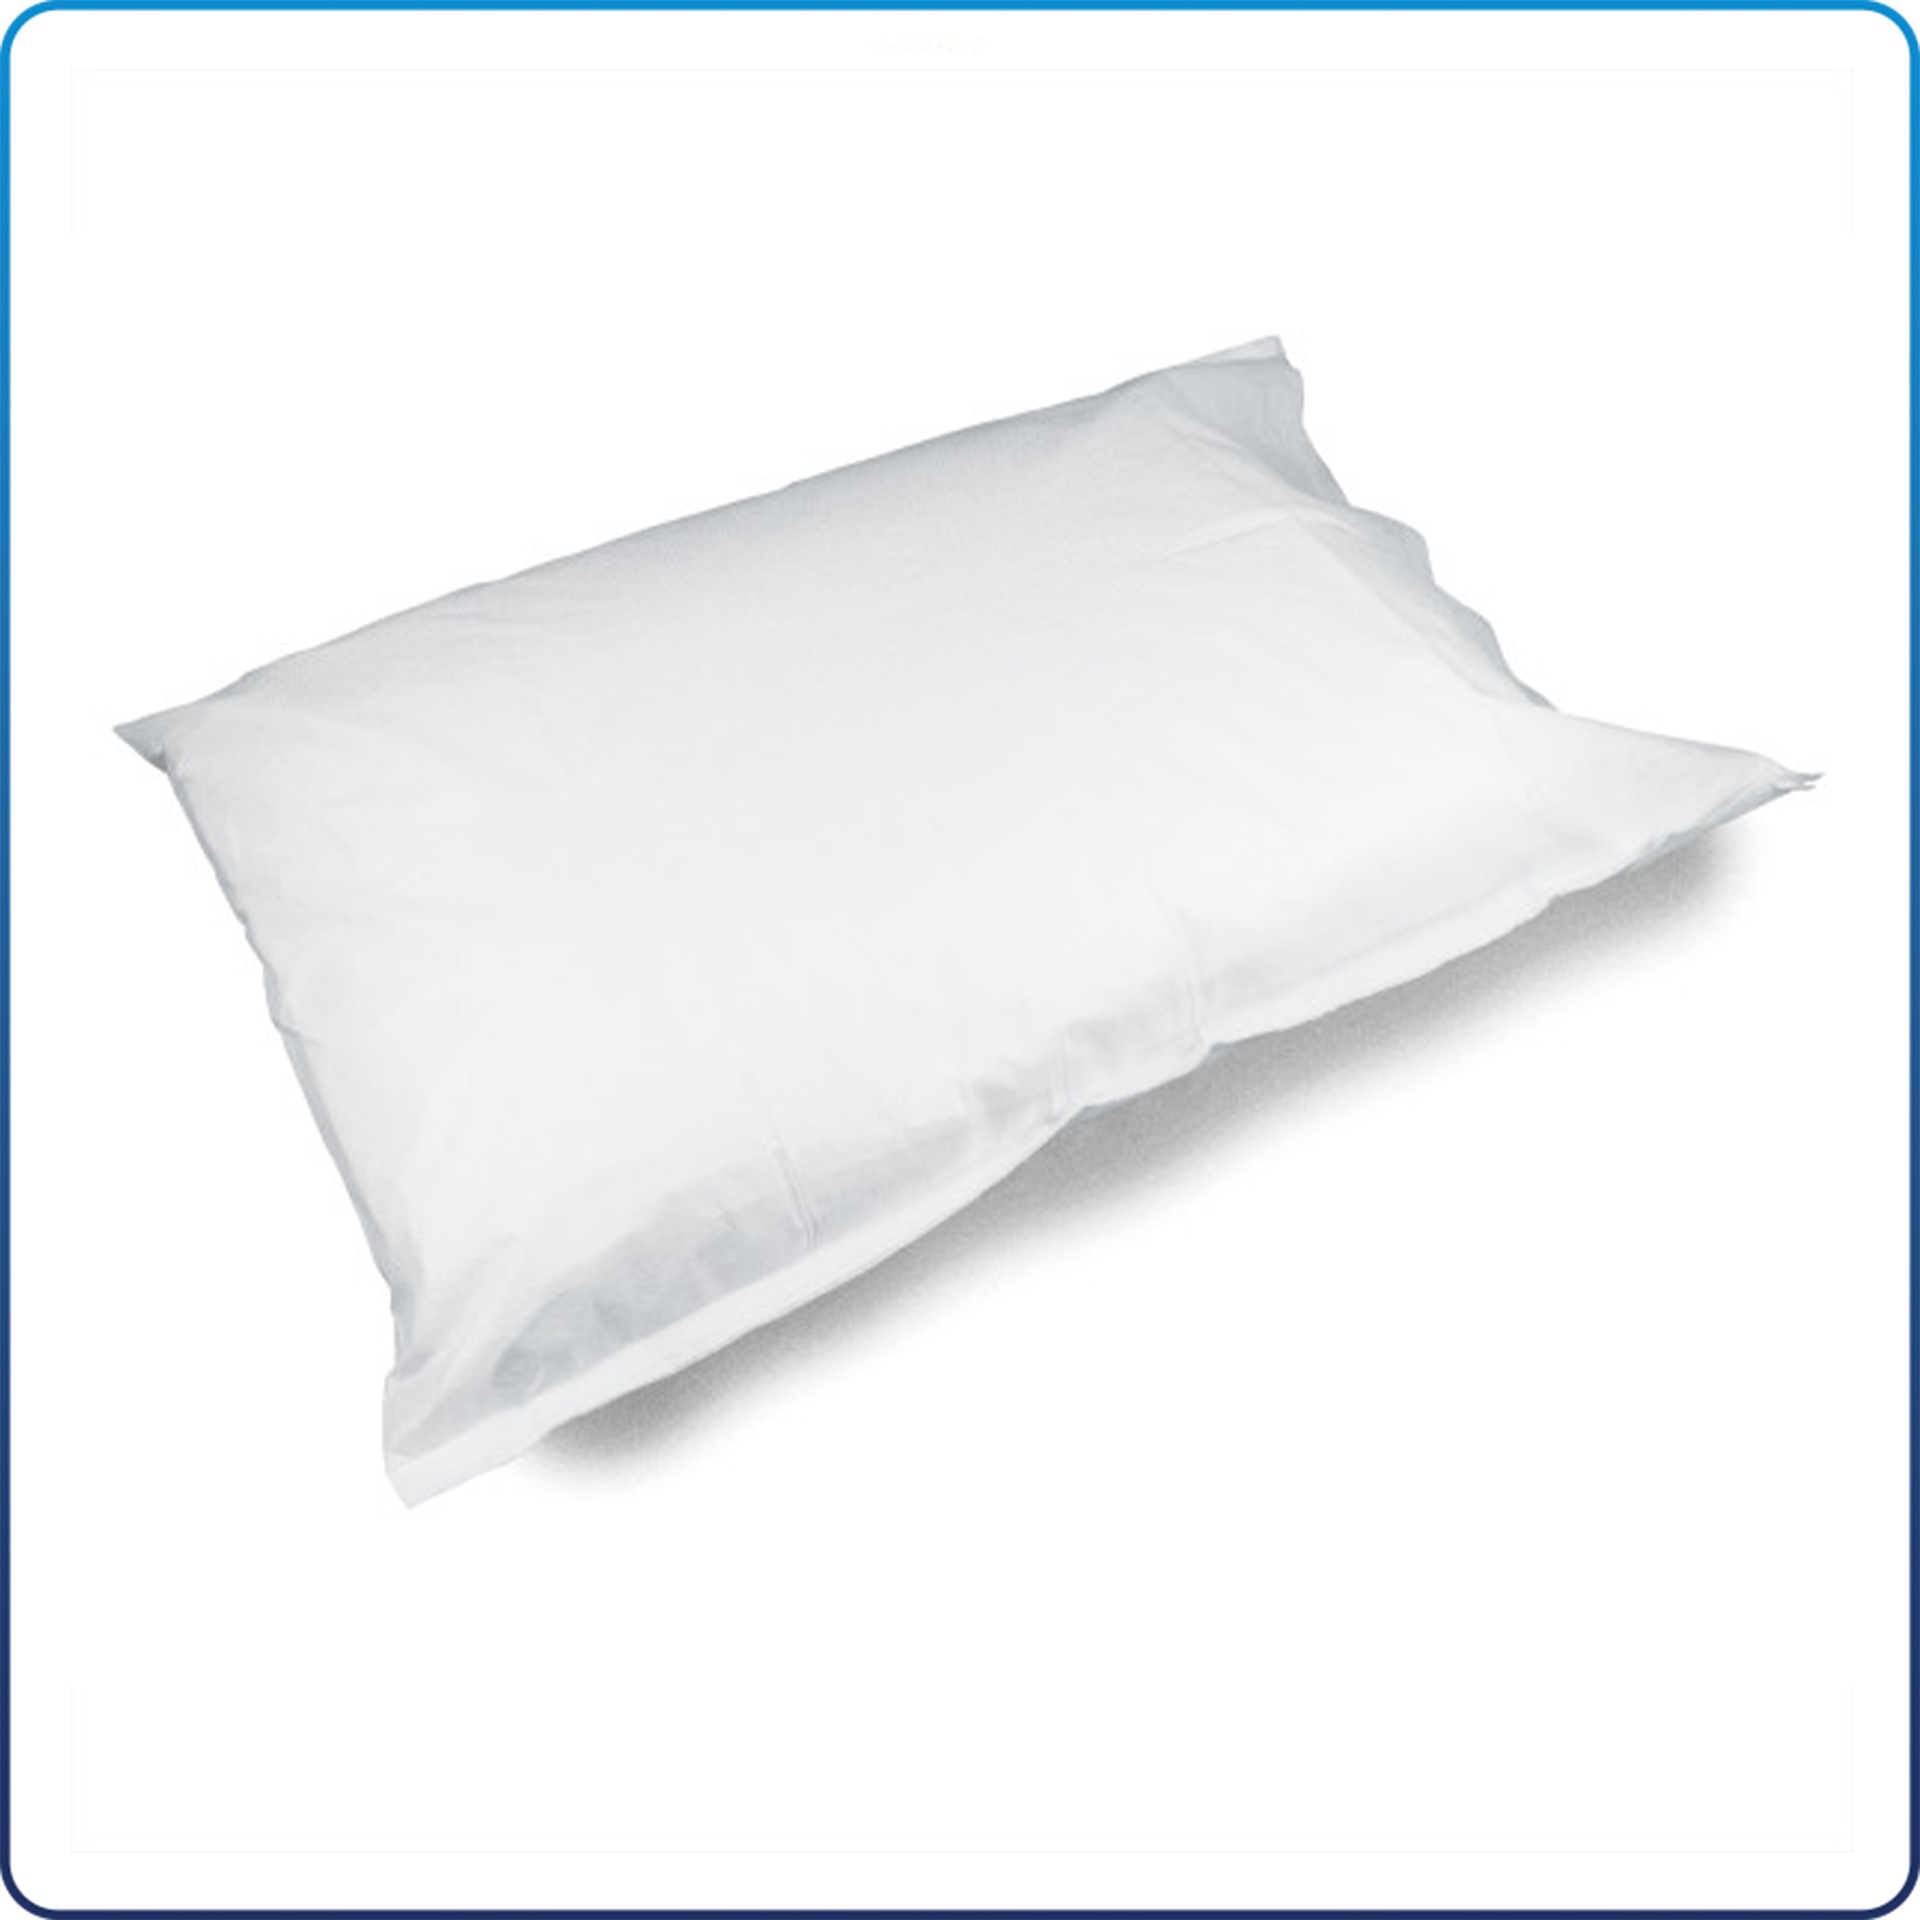 [47256] Pillow Cases - TP 2-Ply, White, 21" X 30" 100/cs